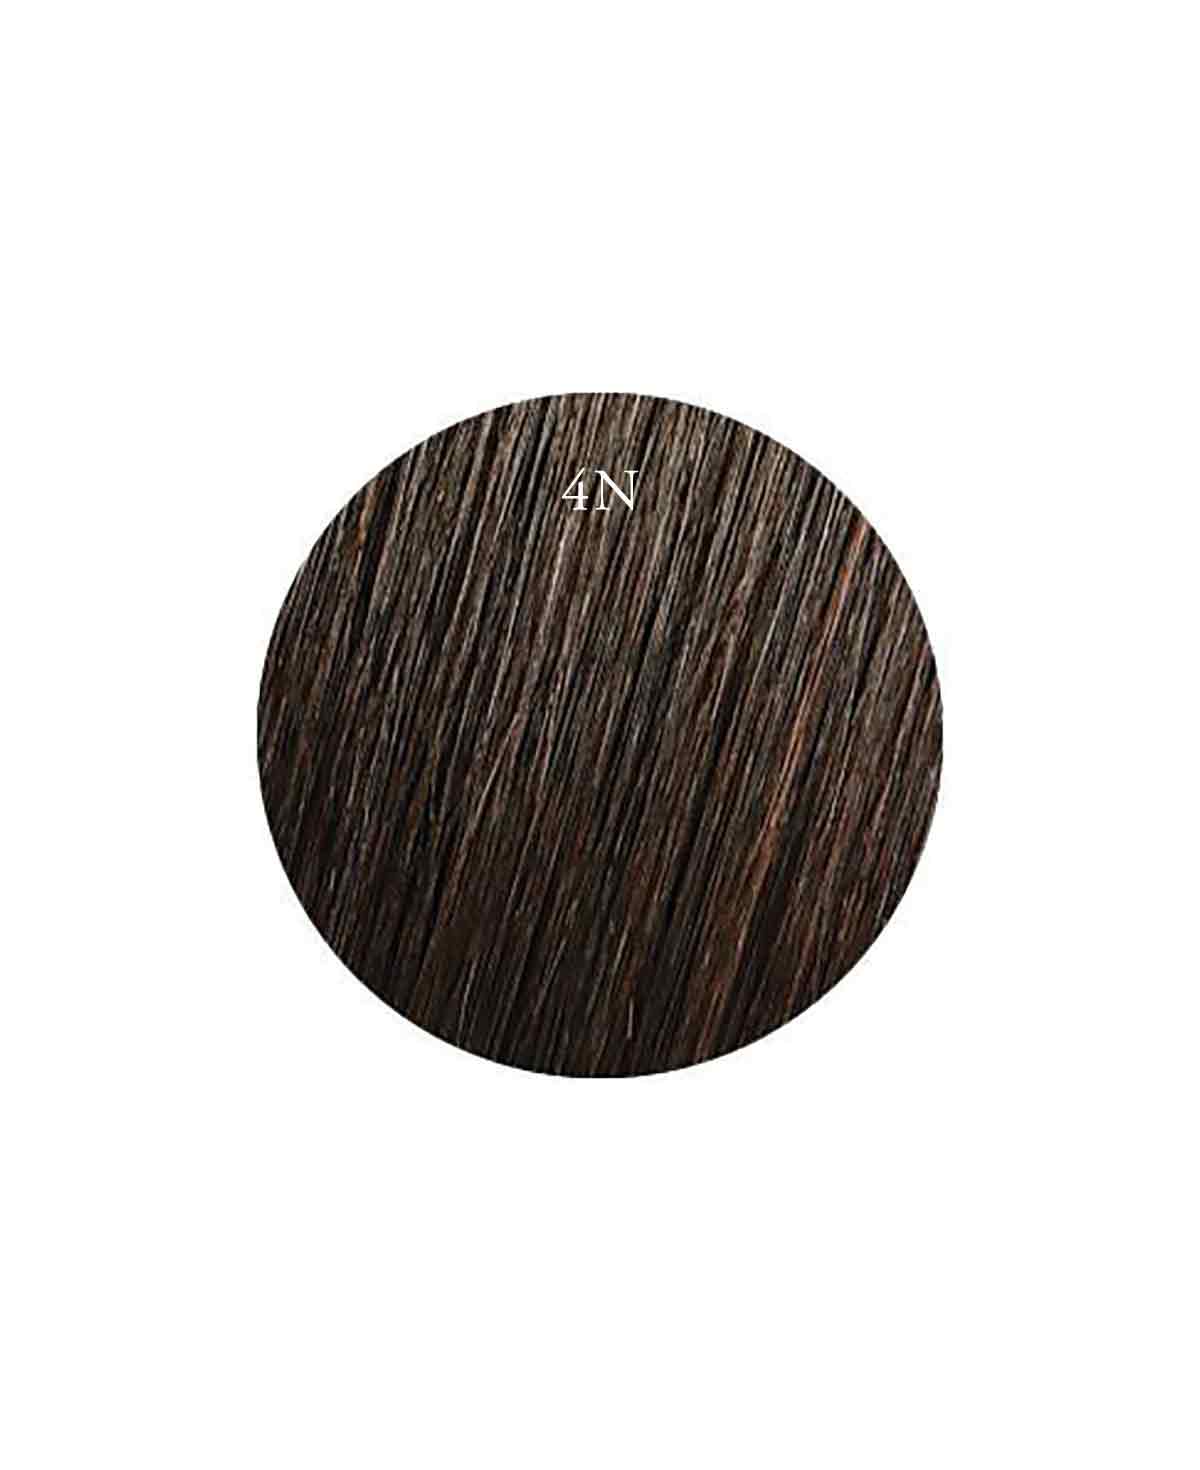 Showpony 45-50cm (20") 7 Piece Clip In Hair Extension - 4N Midnight Brown